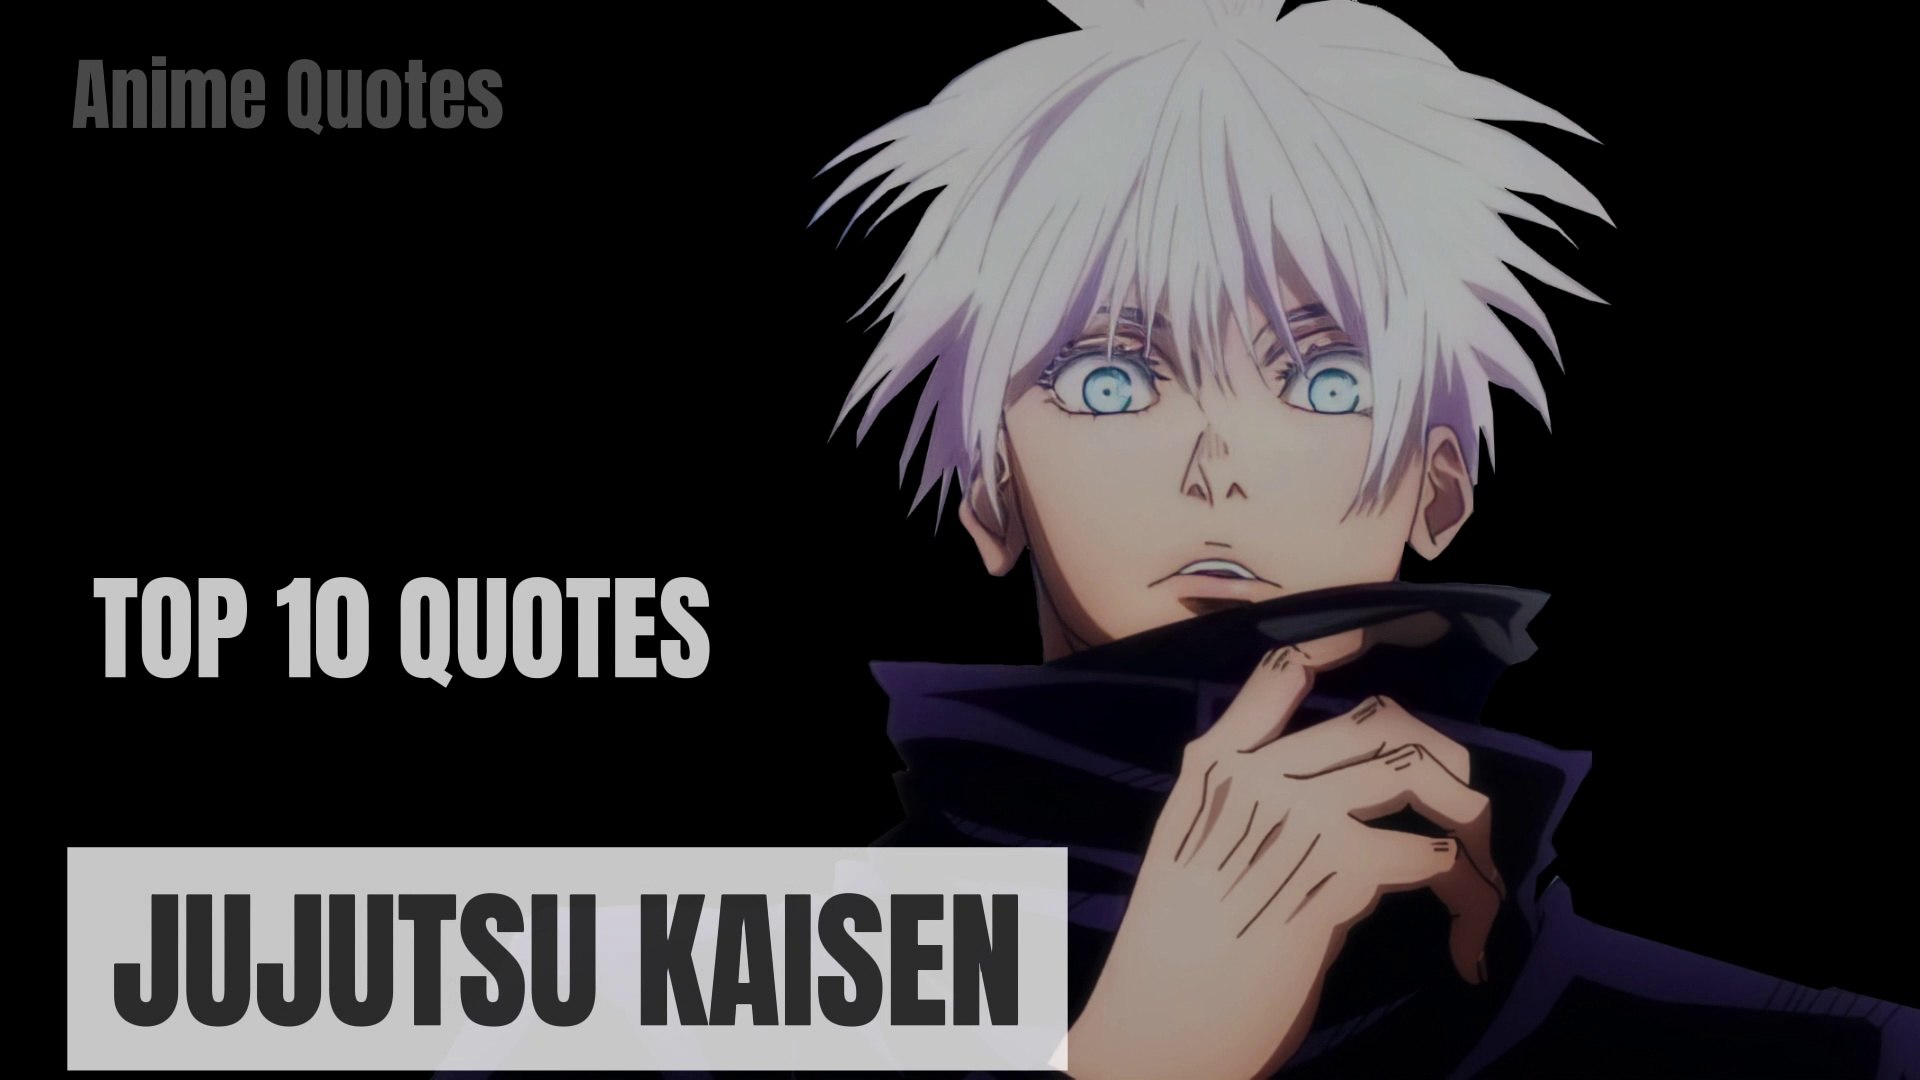 Top 10 Quotes Anime - Jujutsu Kaisen - video Dailymotion